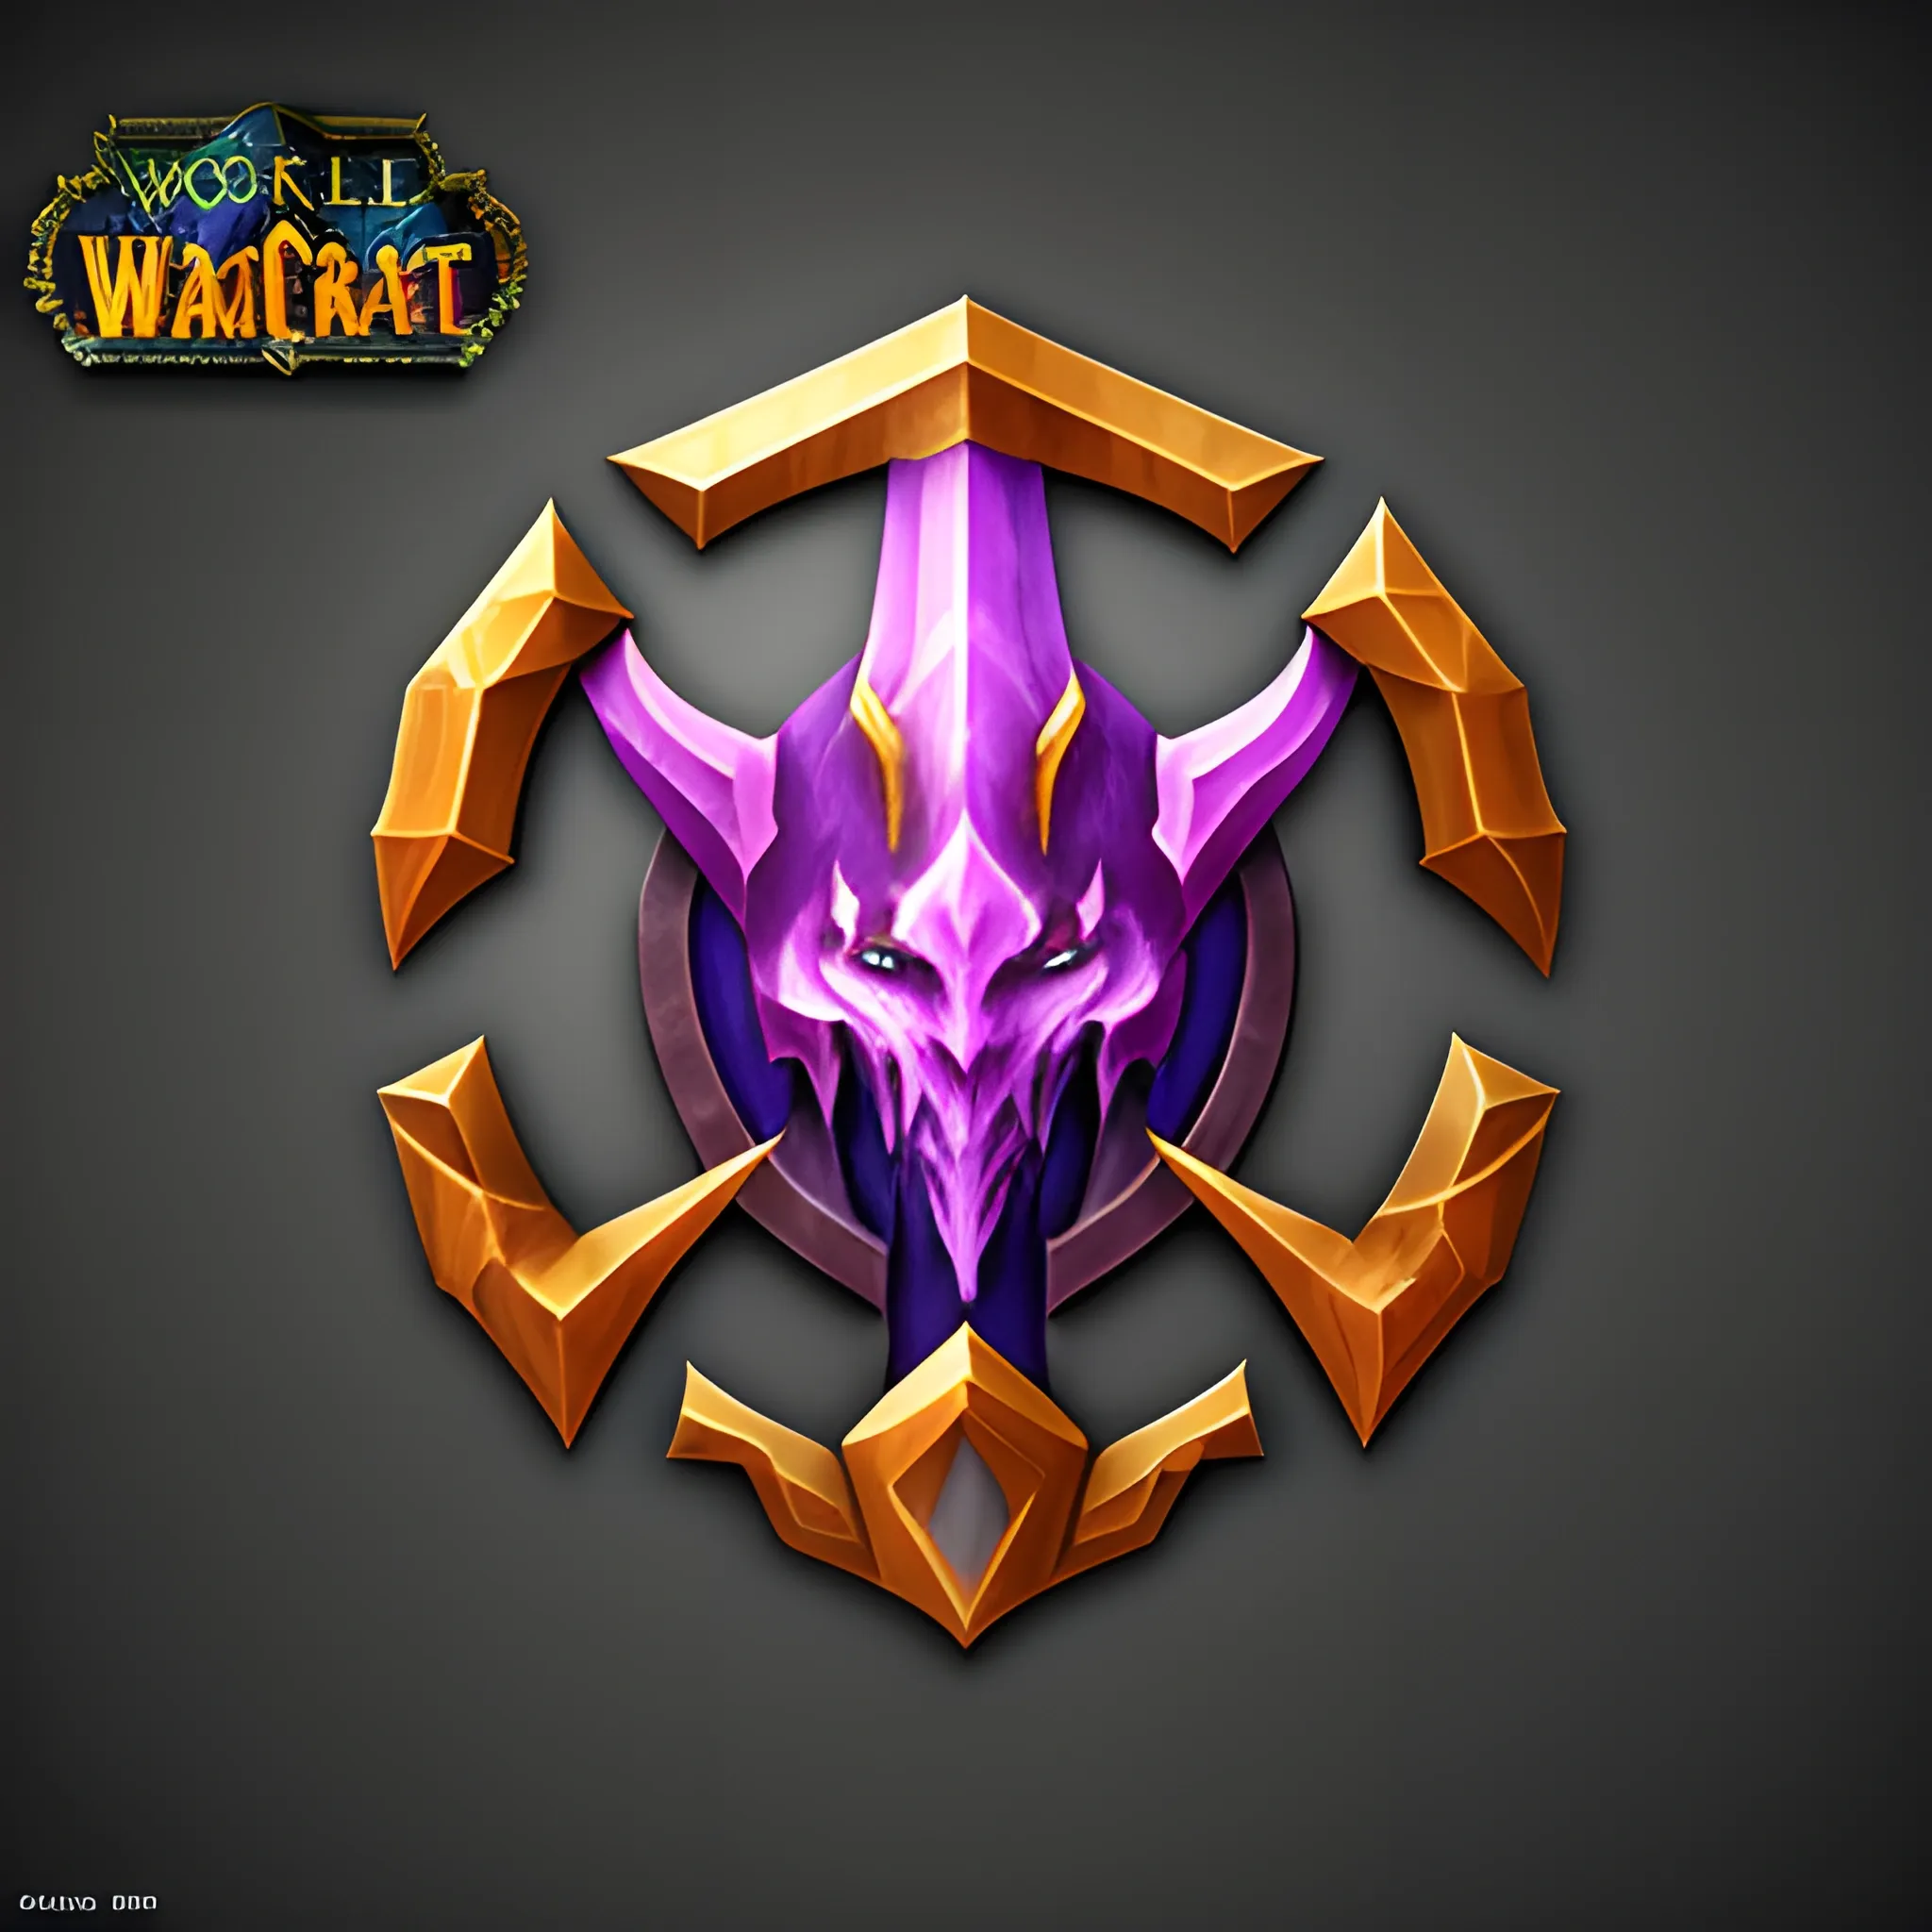 logo, "Logo design", World of warcraft, 3d, 3D